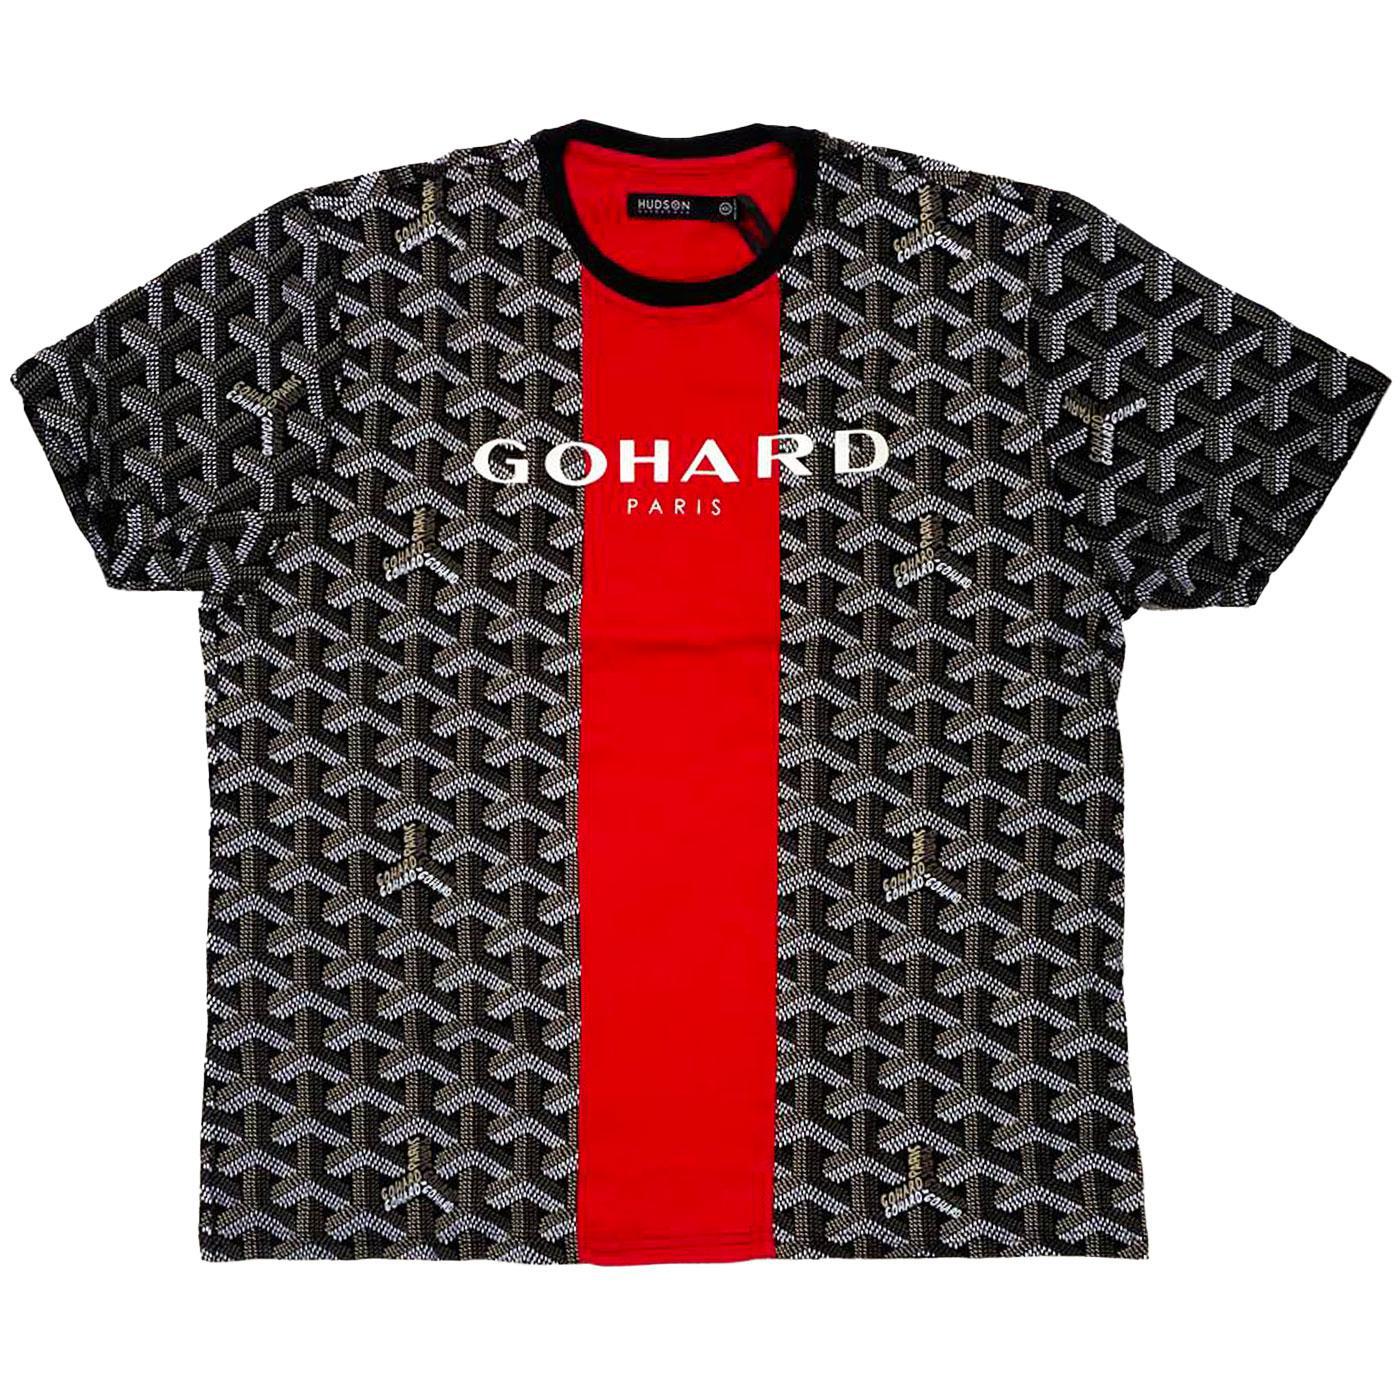 Gohard Tee (Black) | Hudson Outerwear